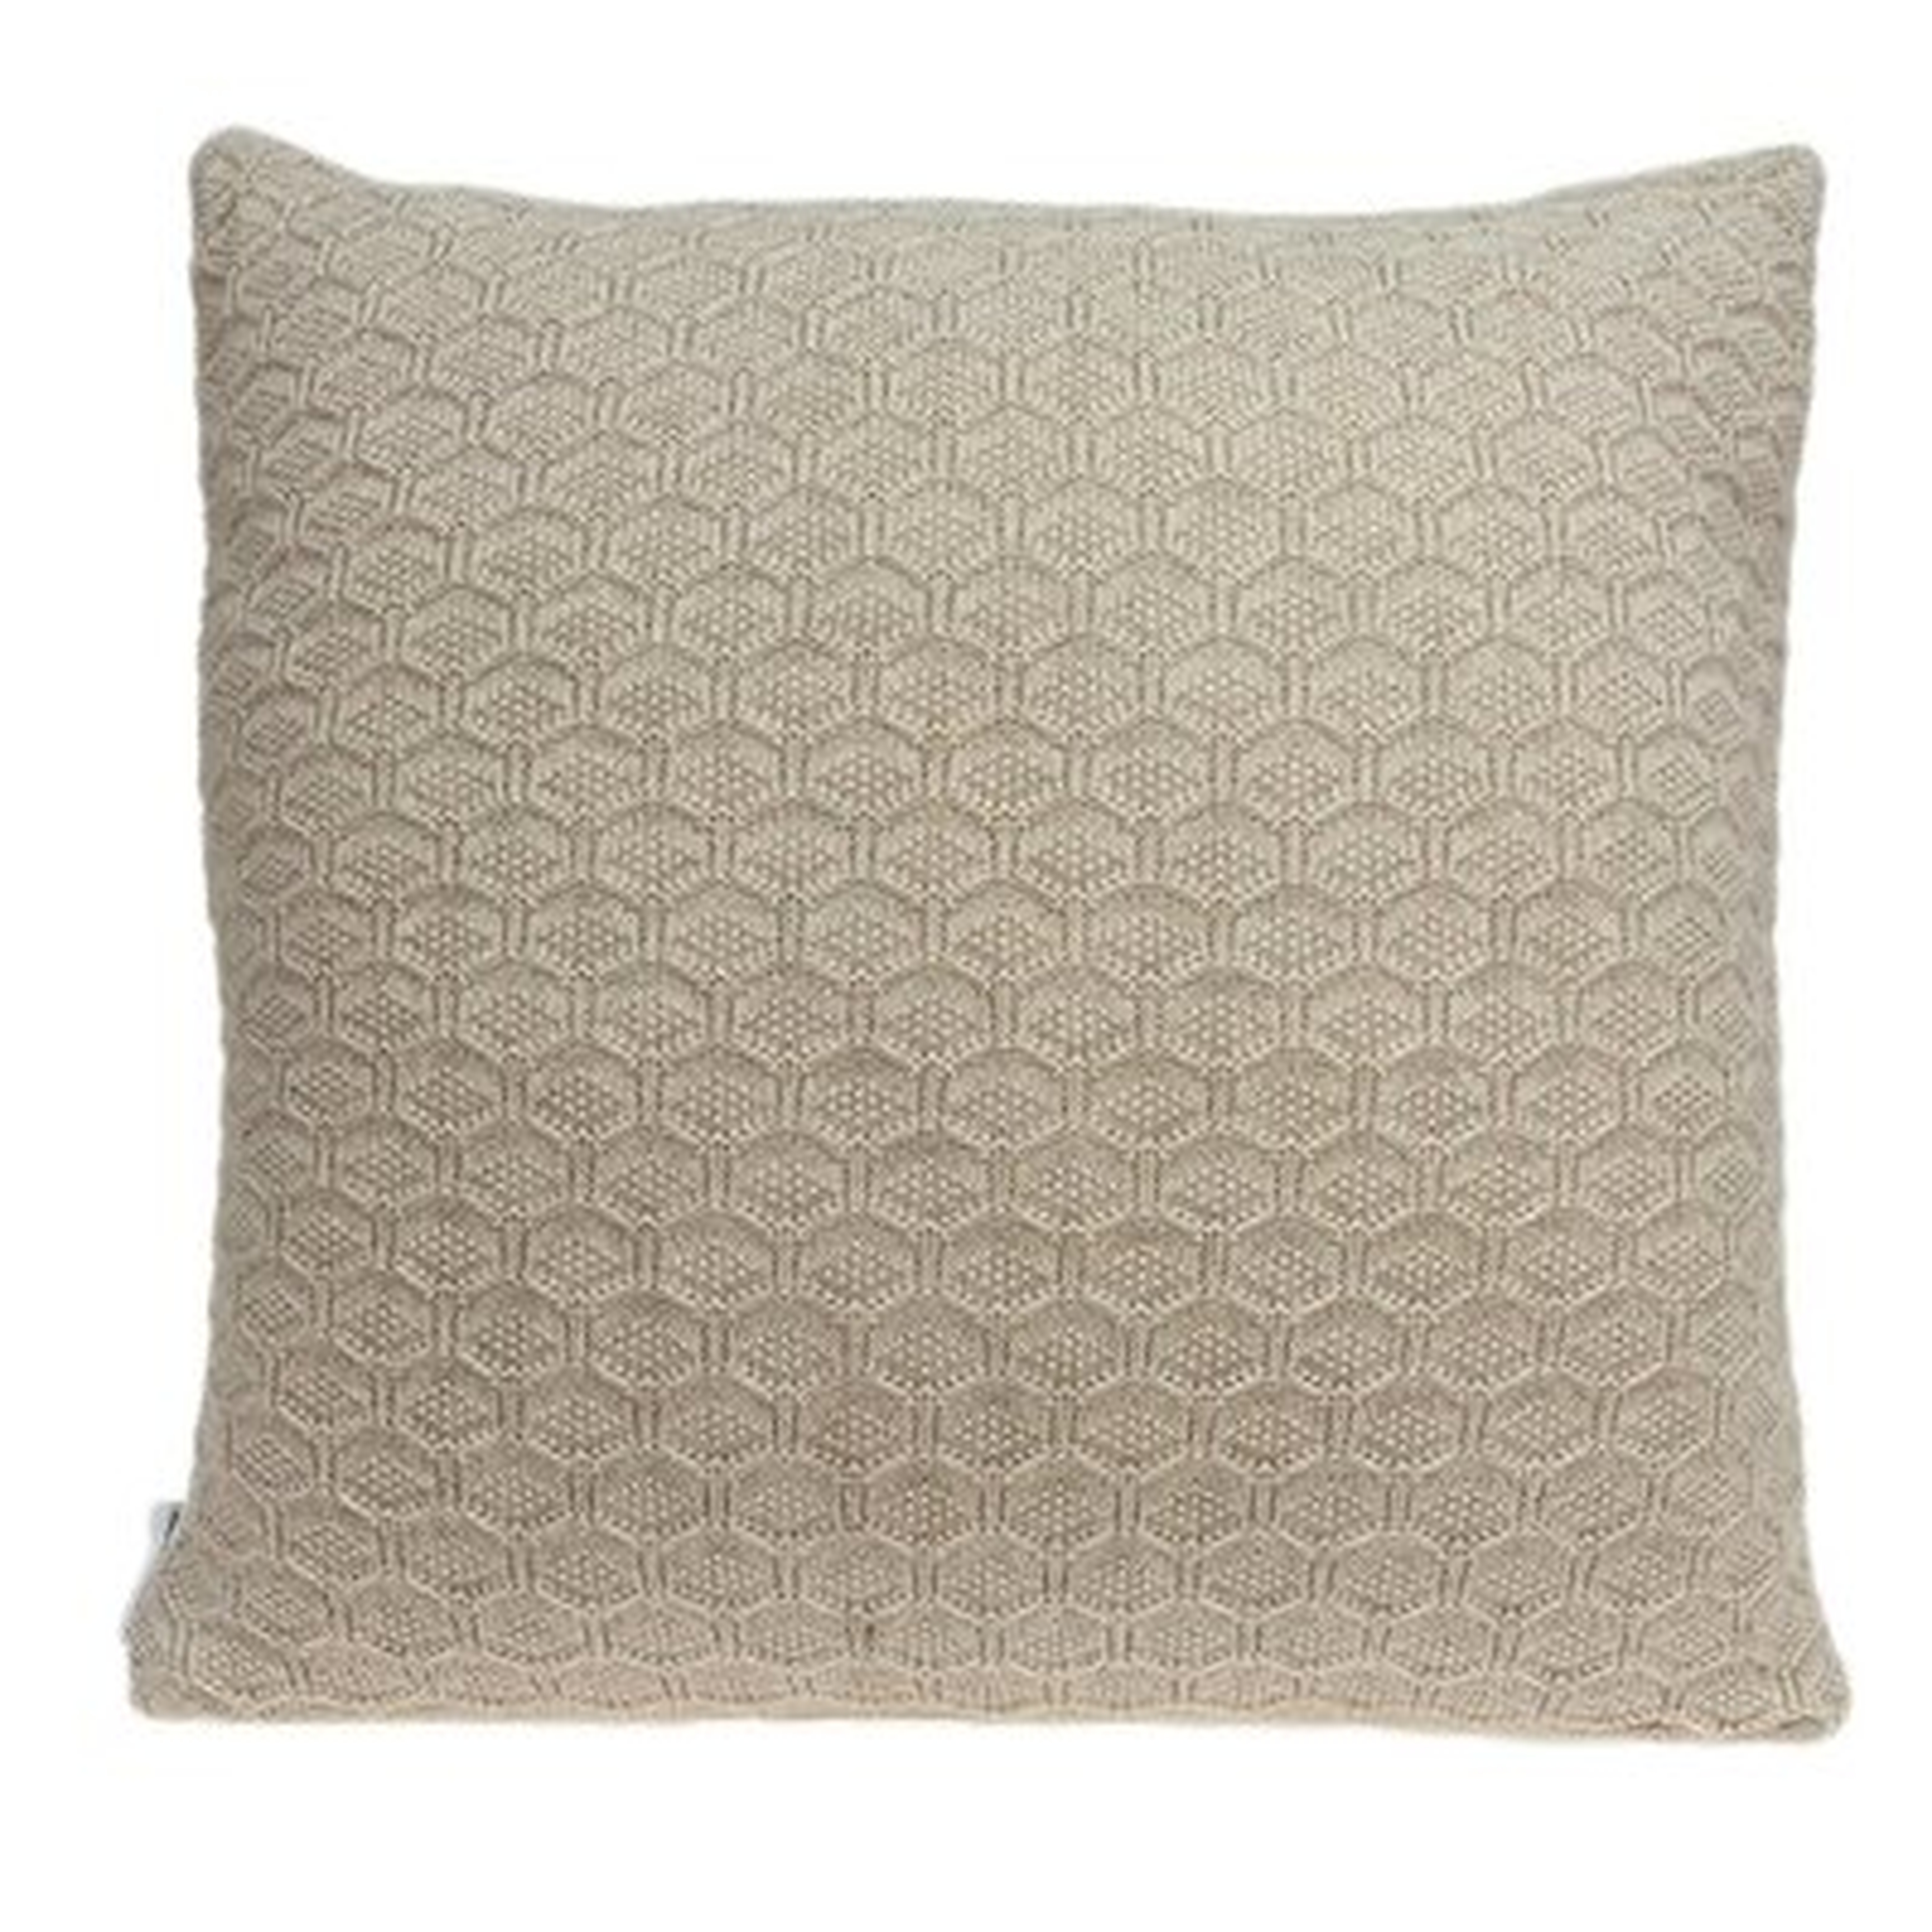 20" X 0.5" X 20" Charming Transitional Tan Pillow Cover - Wayfair